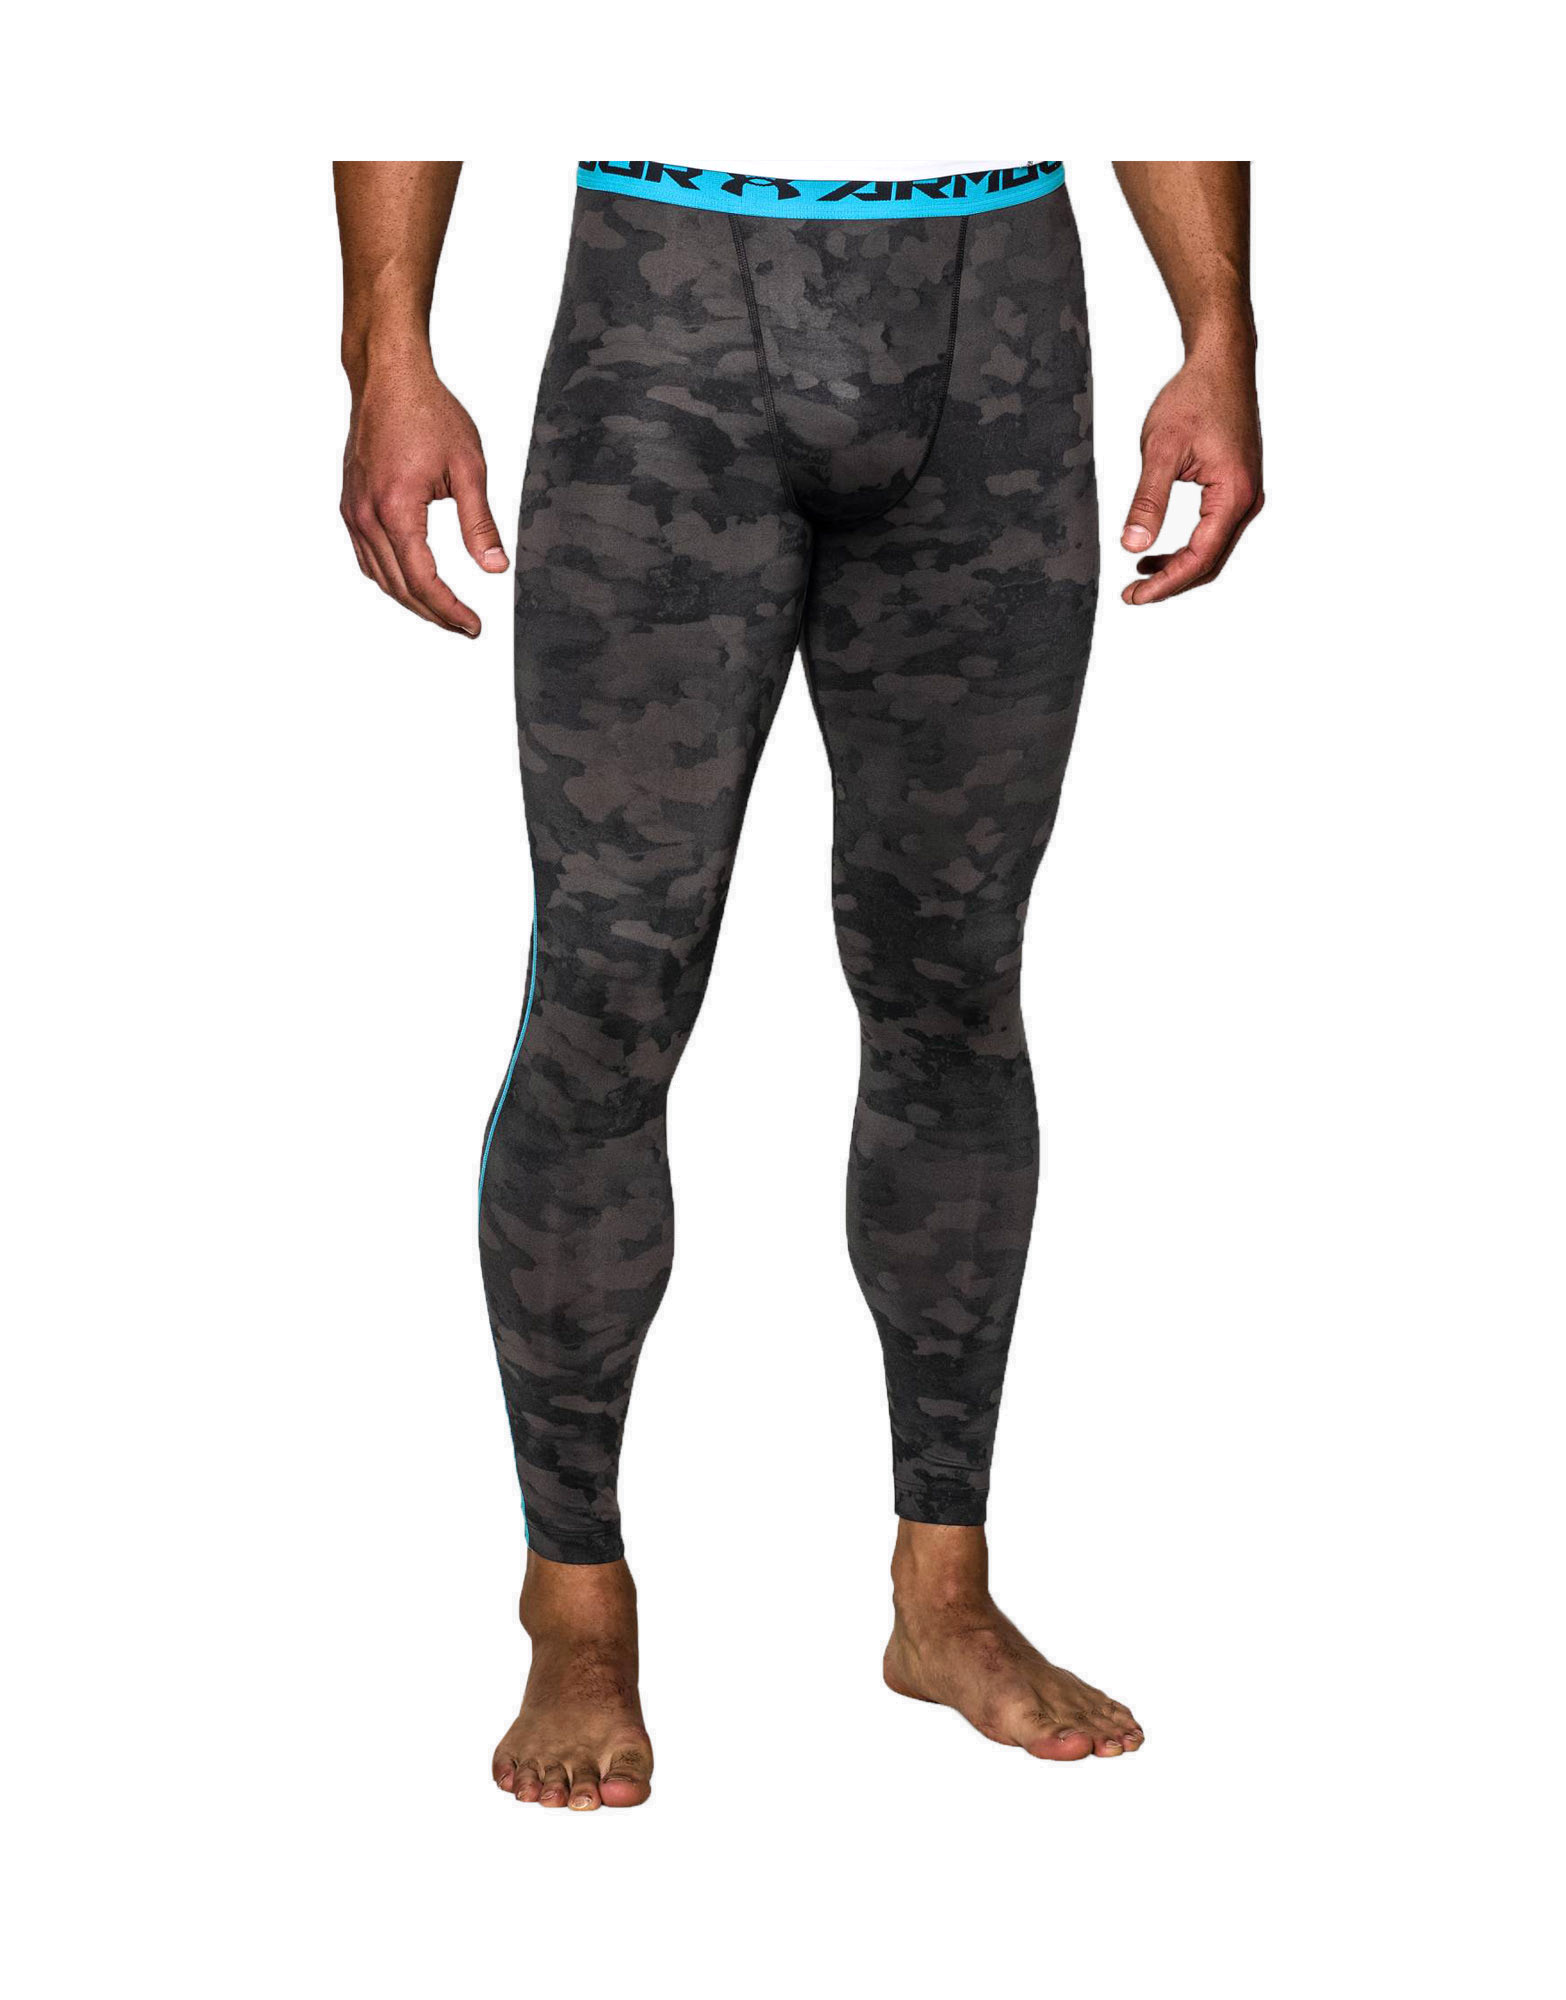 Men's UA HeatGear Armour Printed Compression Leggings by Under armour,  Colour: Black / Island 